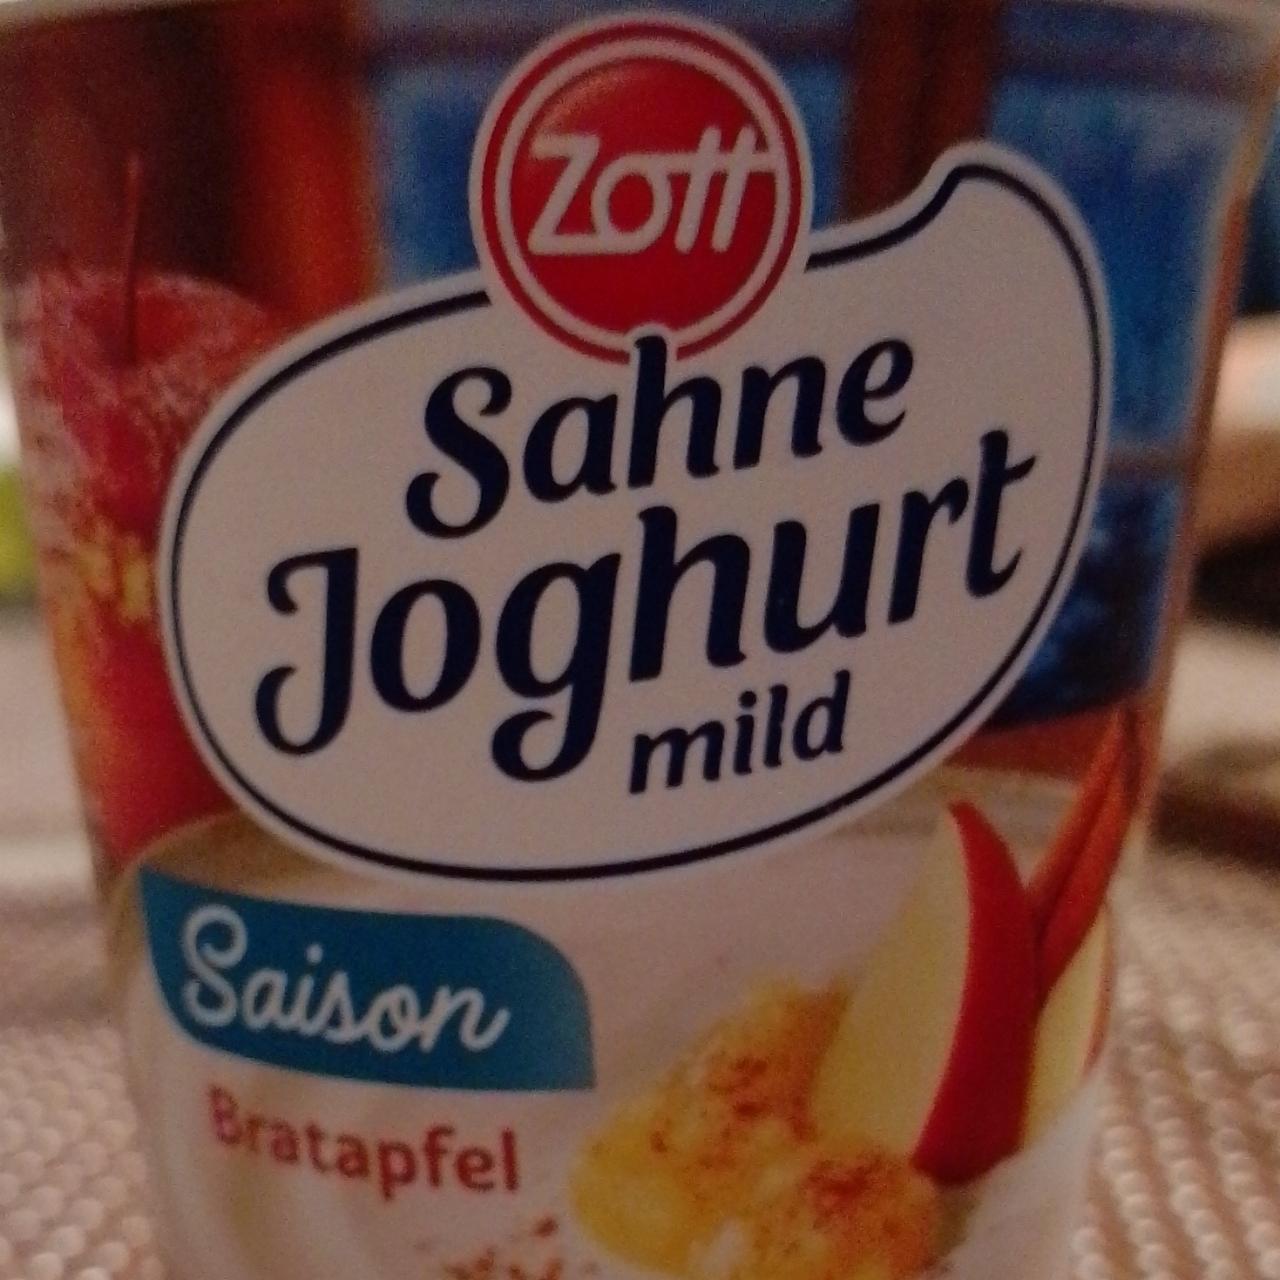 Фото - Sahne Joghurt mild Saison Bratapfel Zott